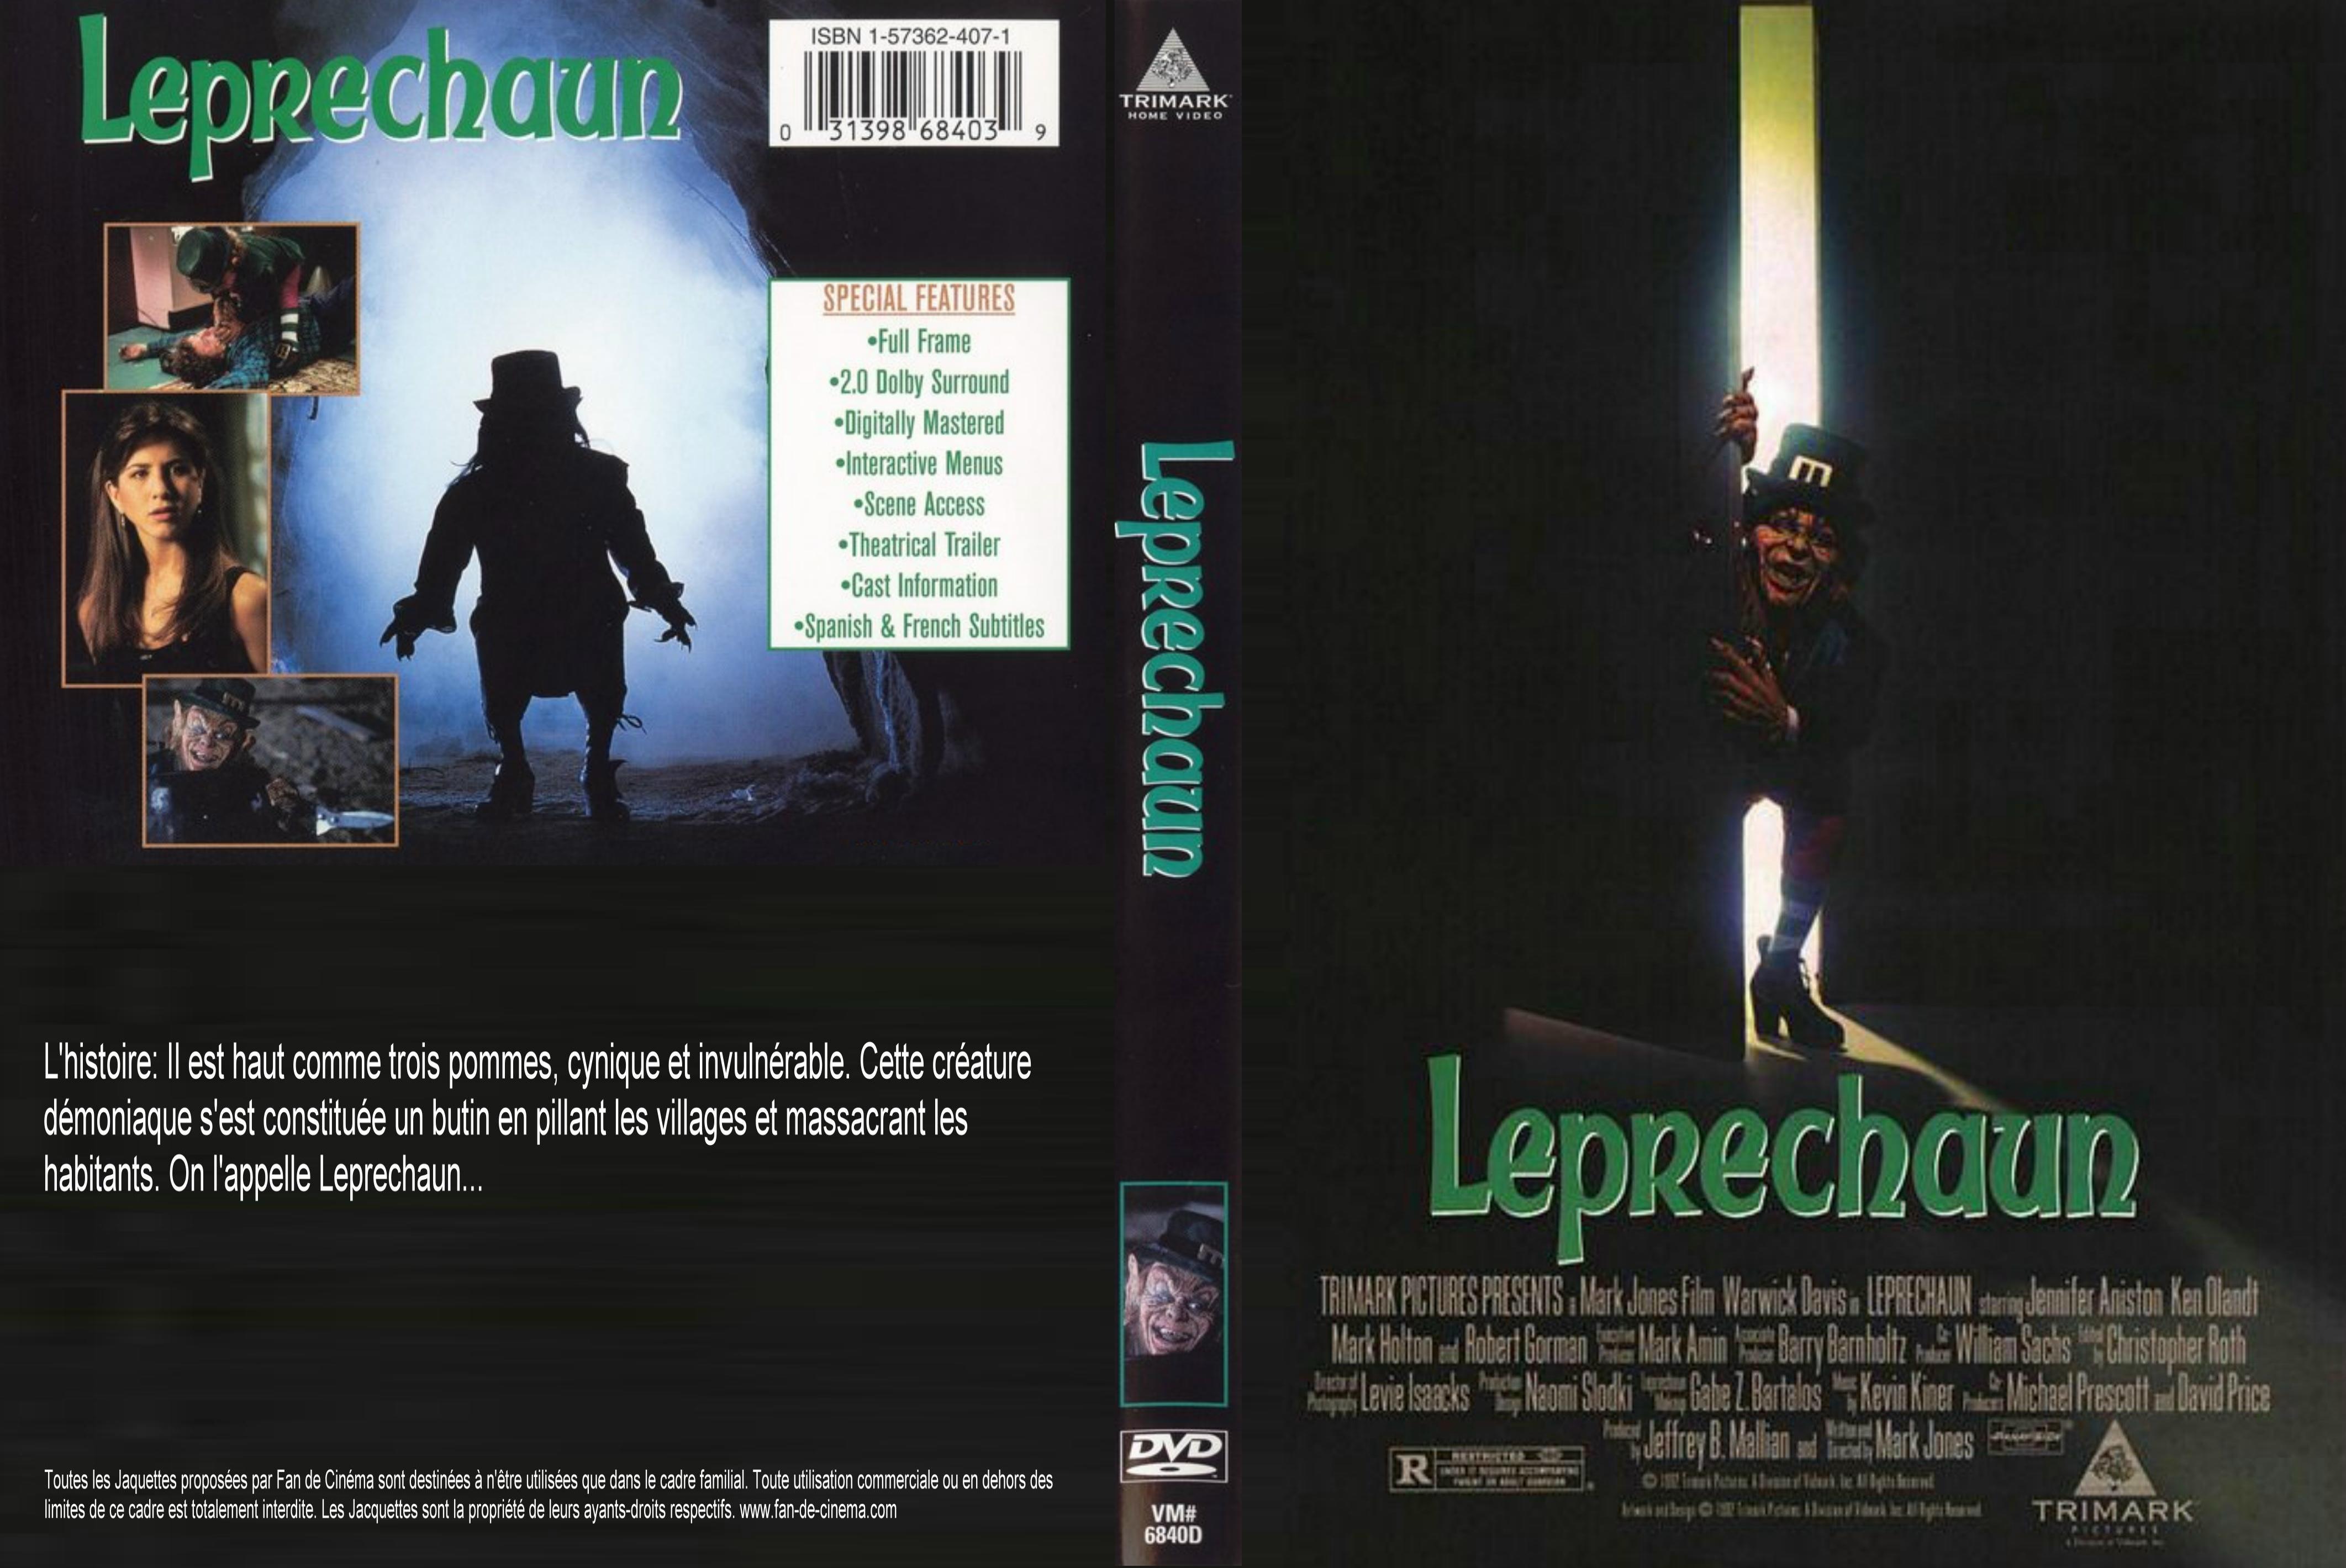 Jaquette DVD Leprechaun custom